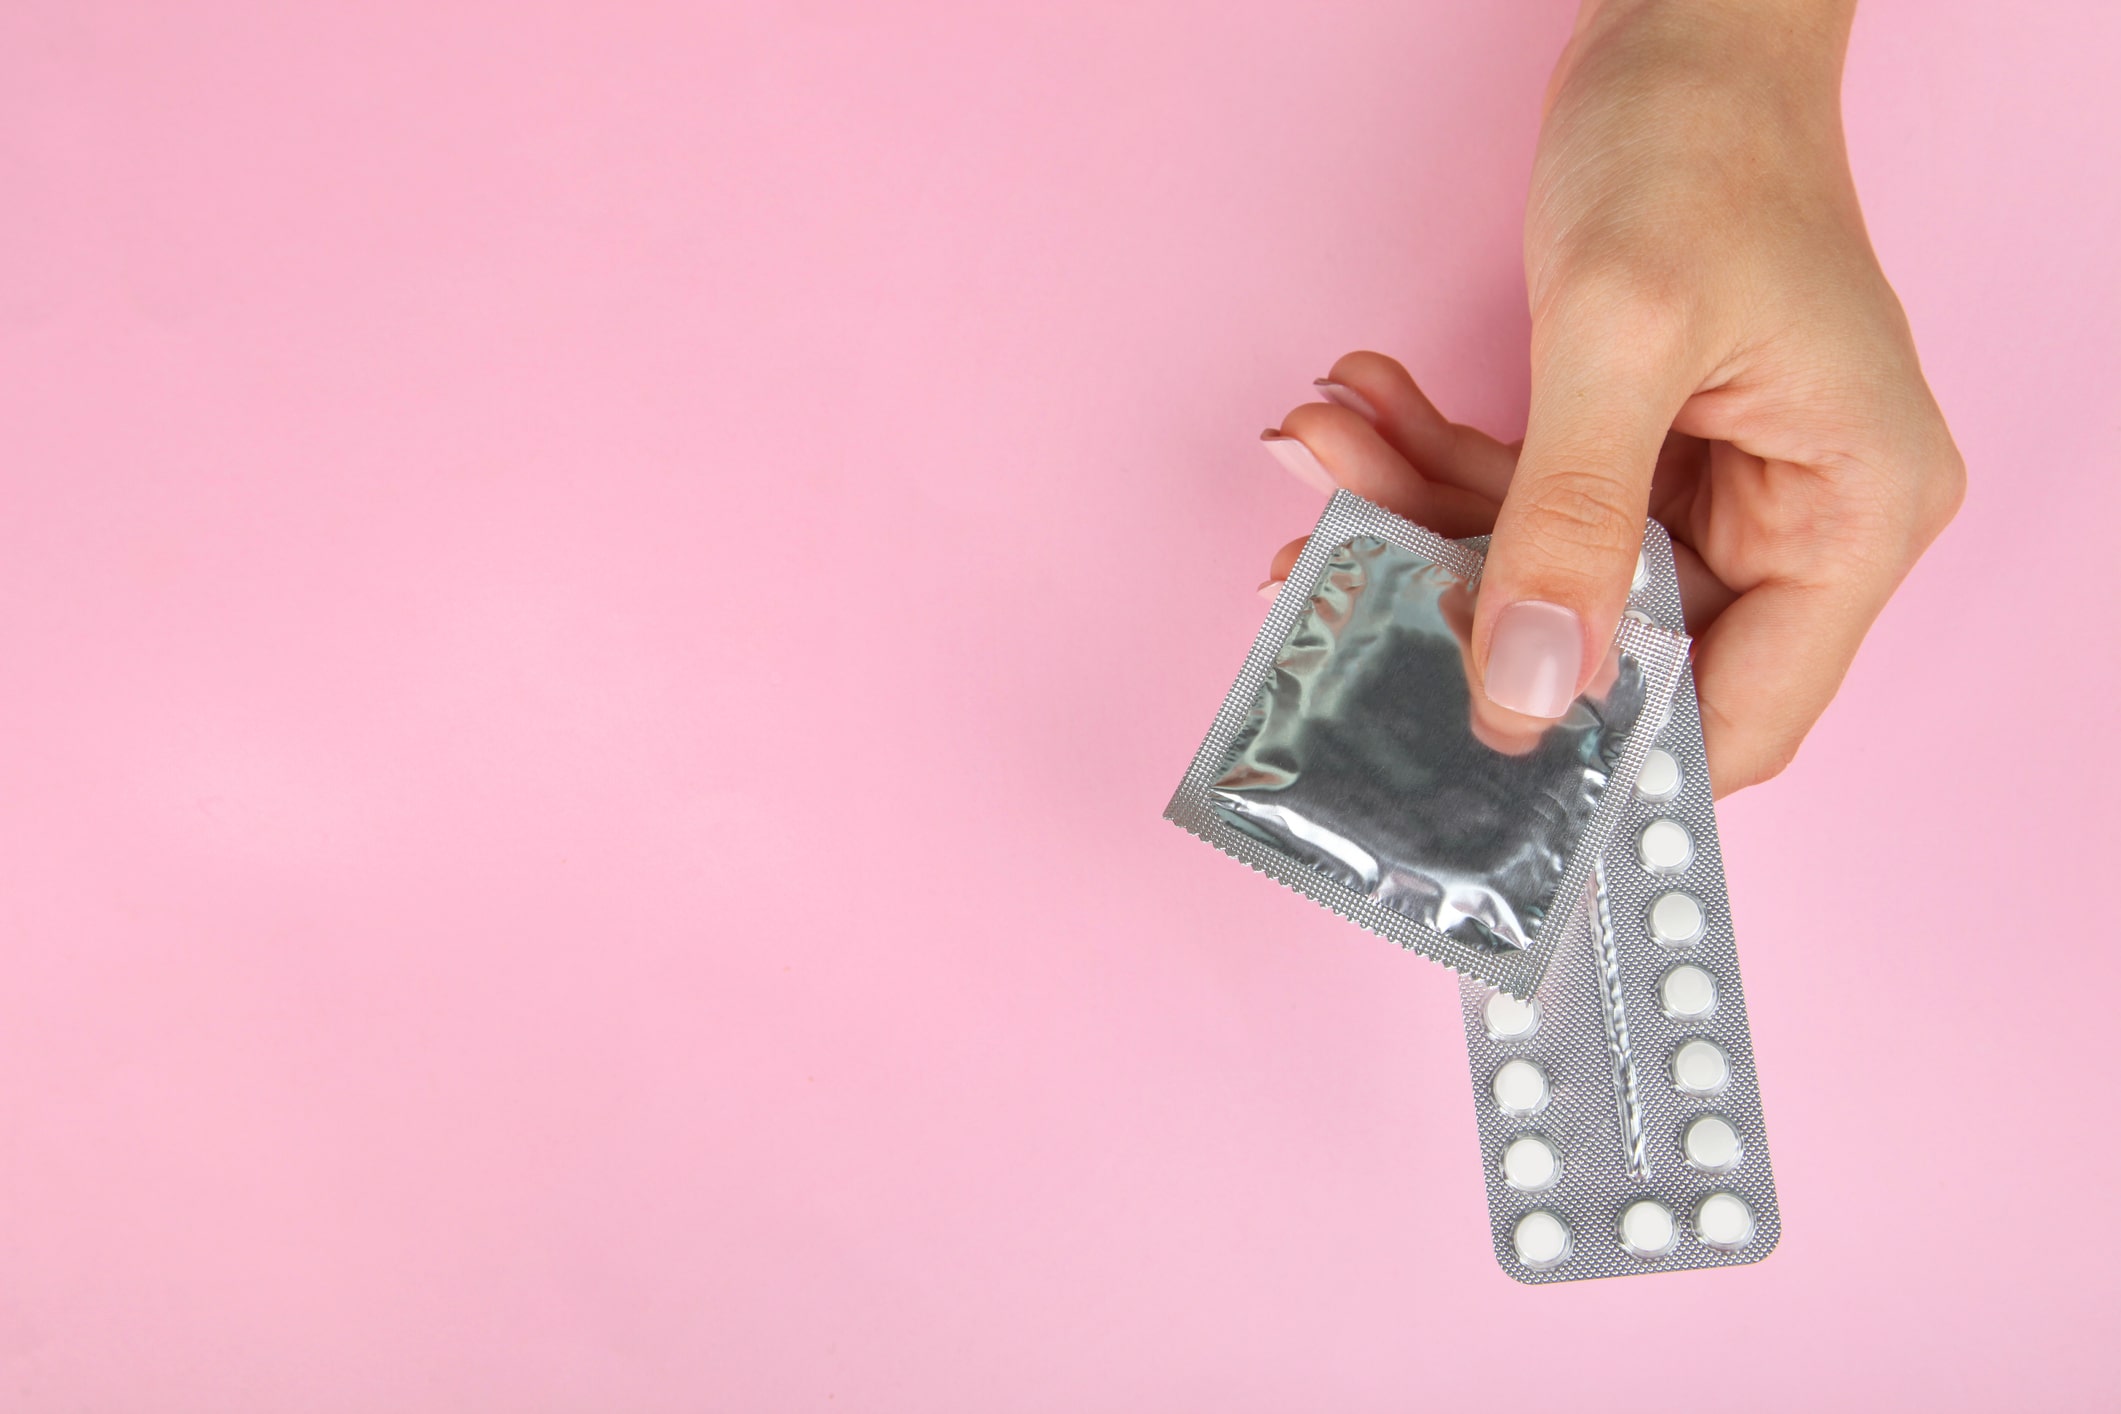 Quel moyen de contraception choisir ?